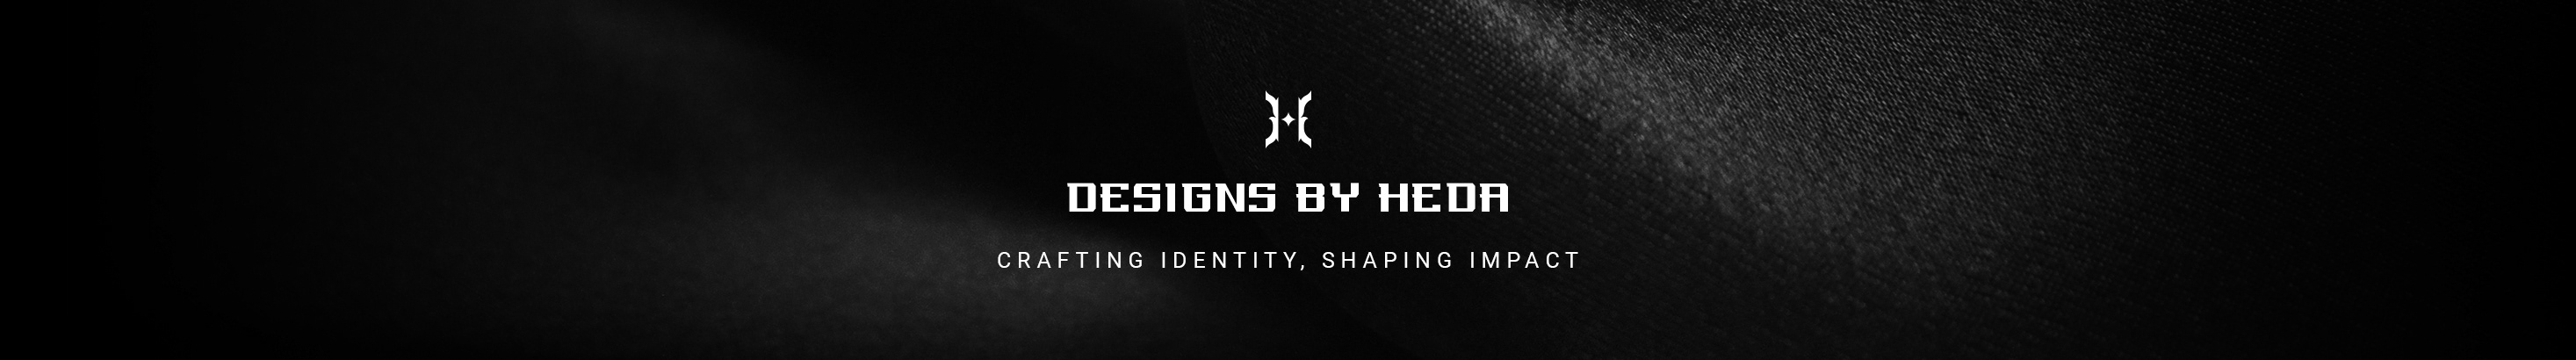 Designs by Heda™ profil başlığı